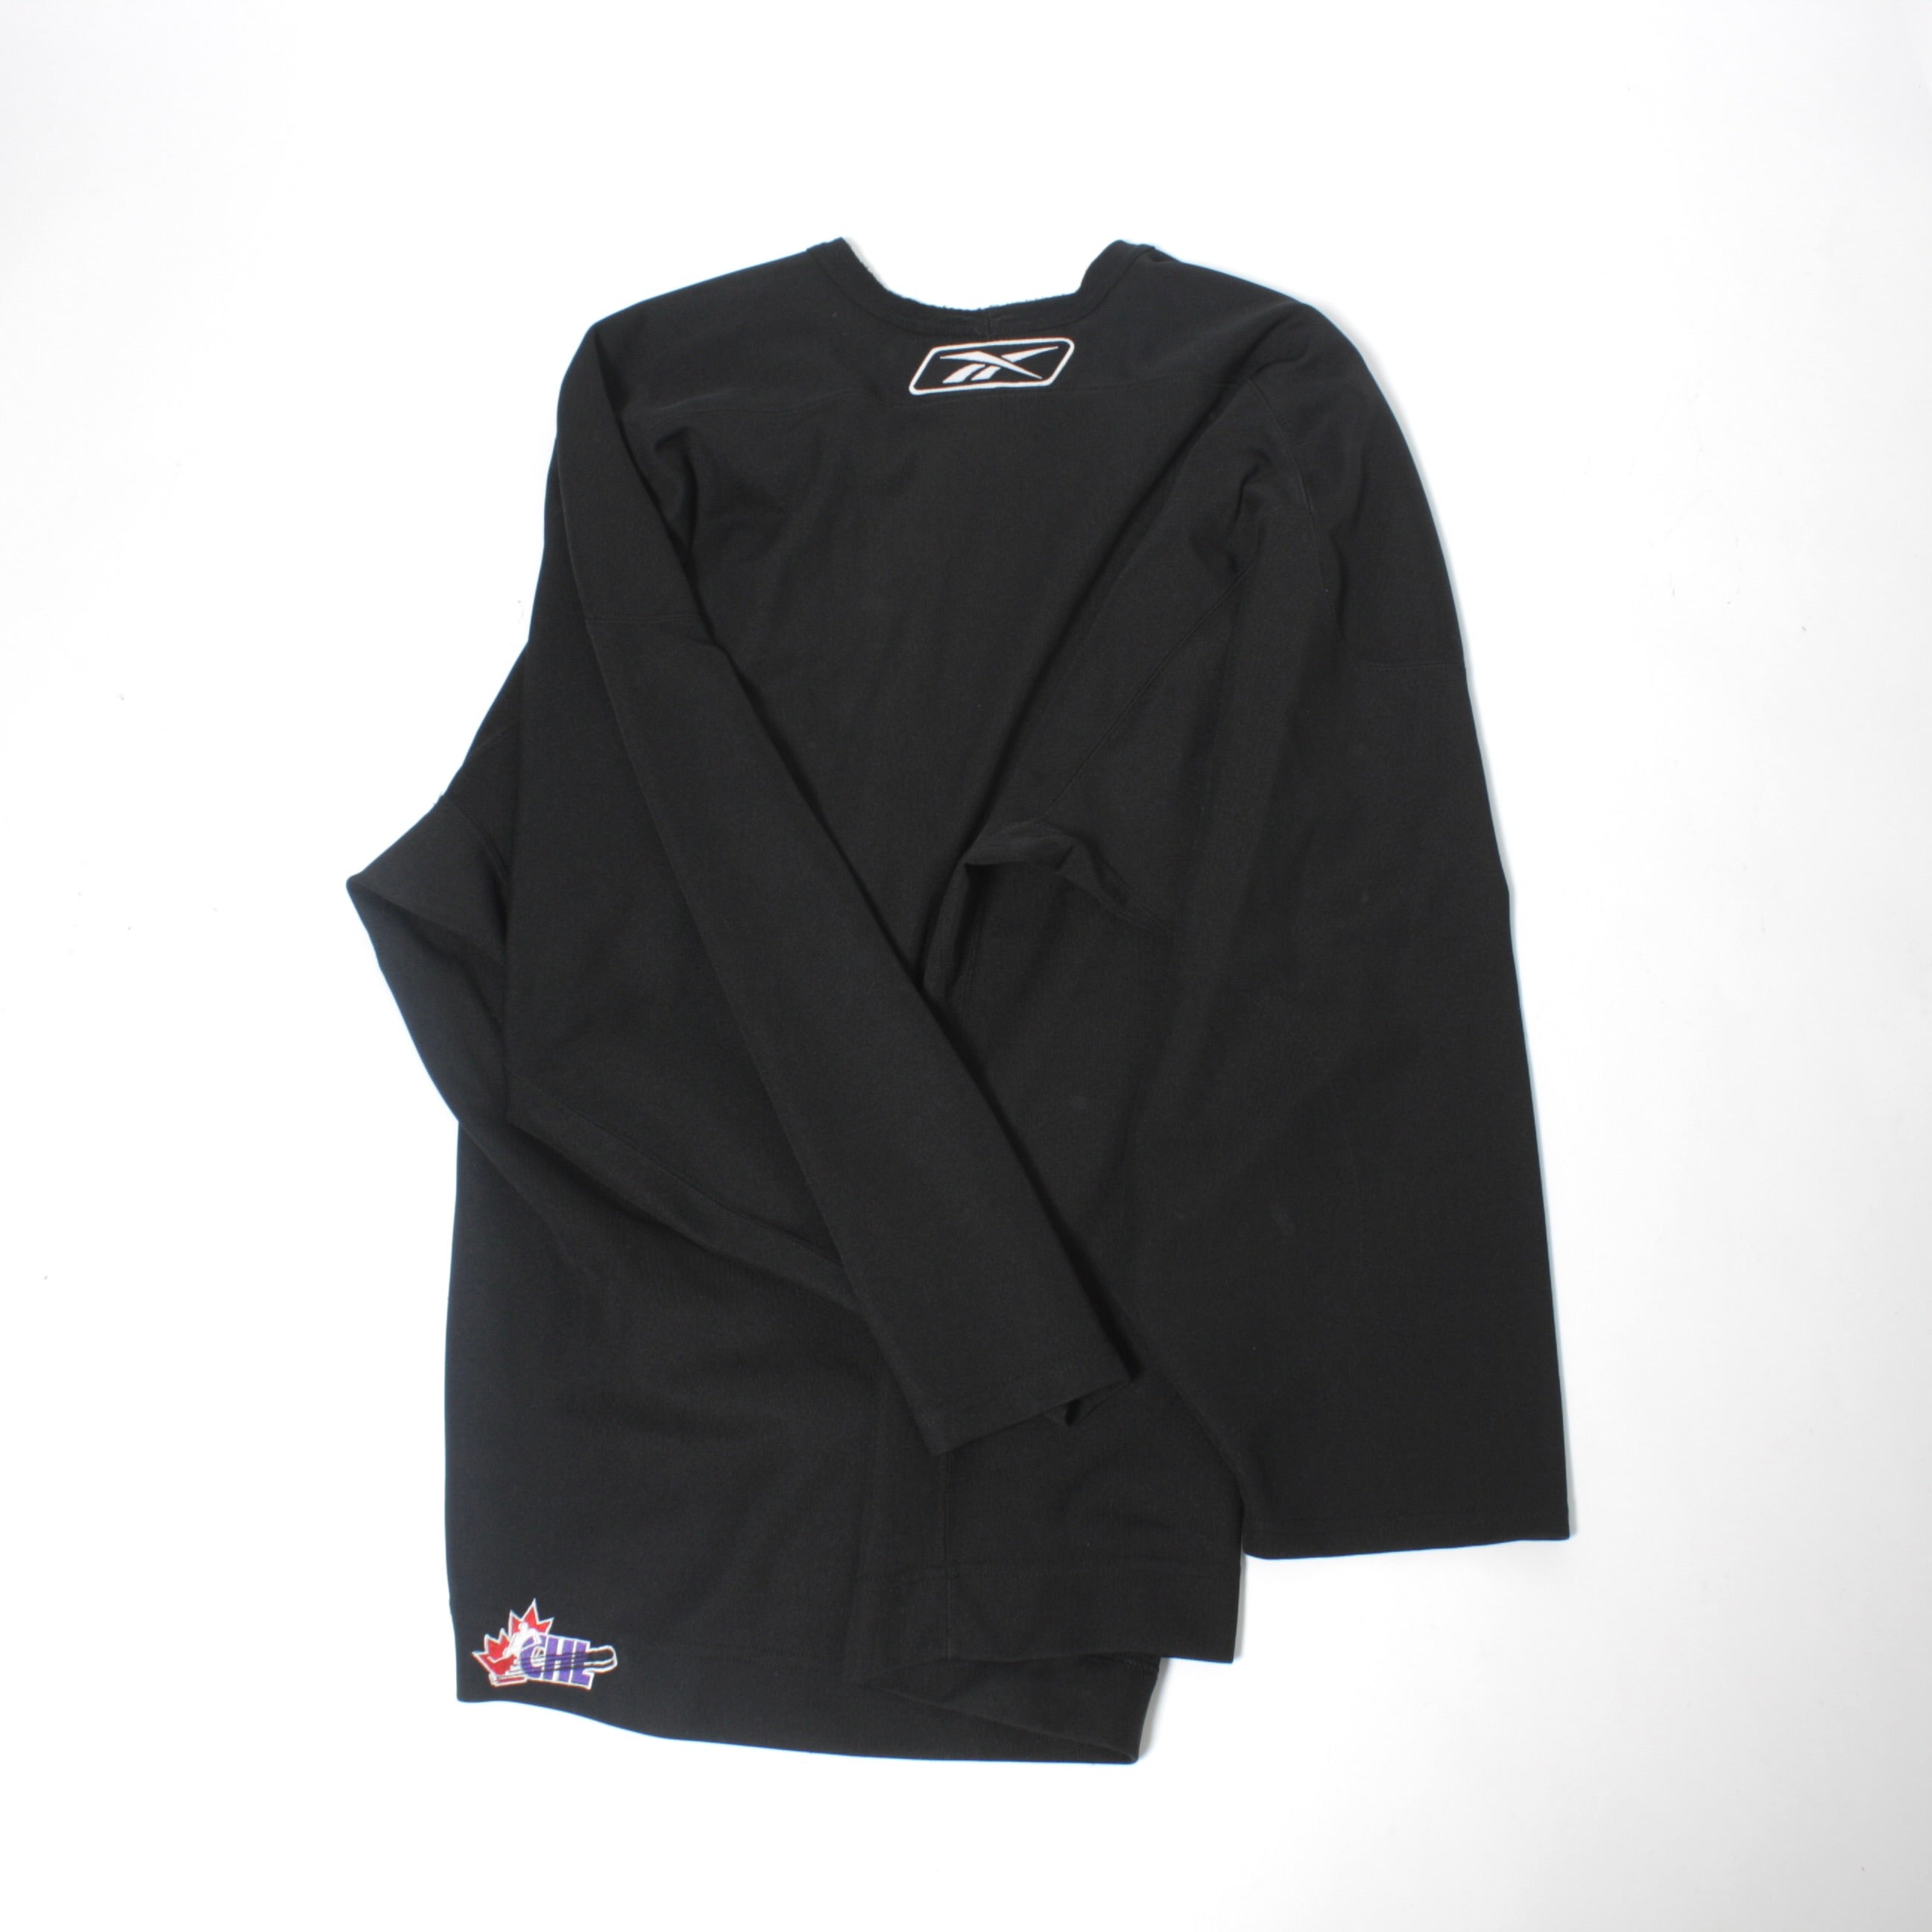 Blank Black NHL Adidas Practice Jersey - NWT Size 56